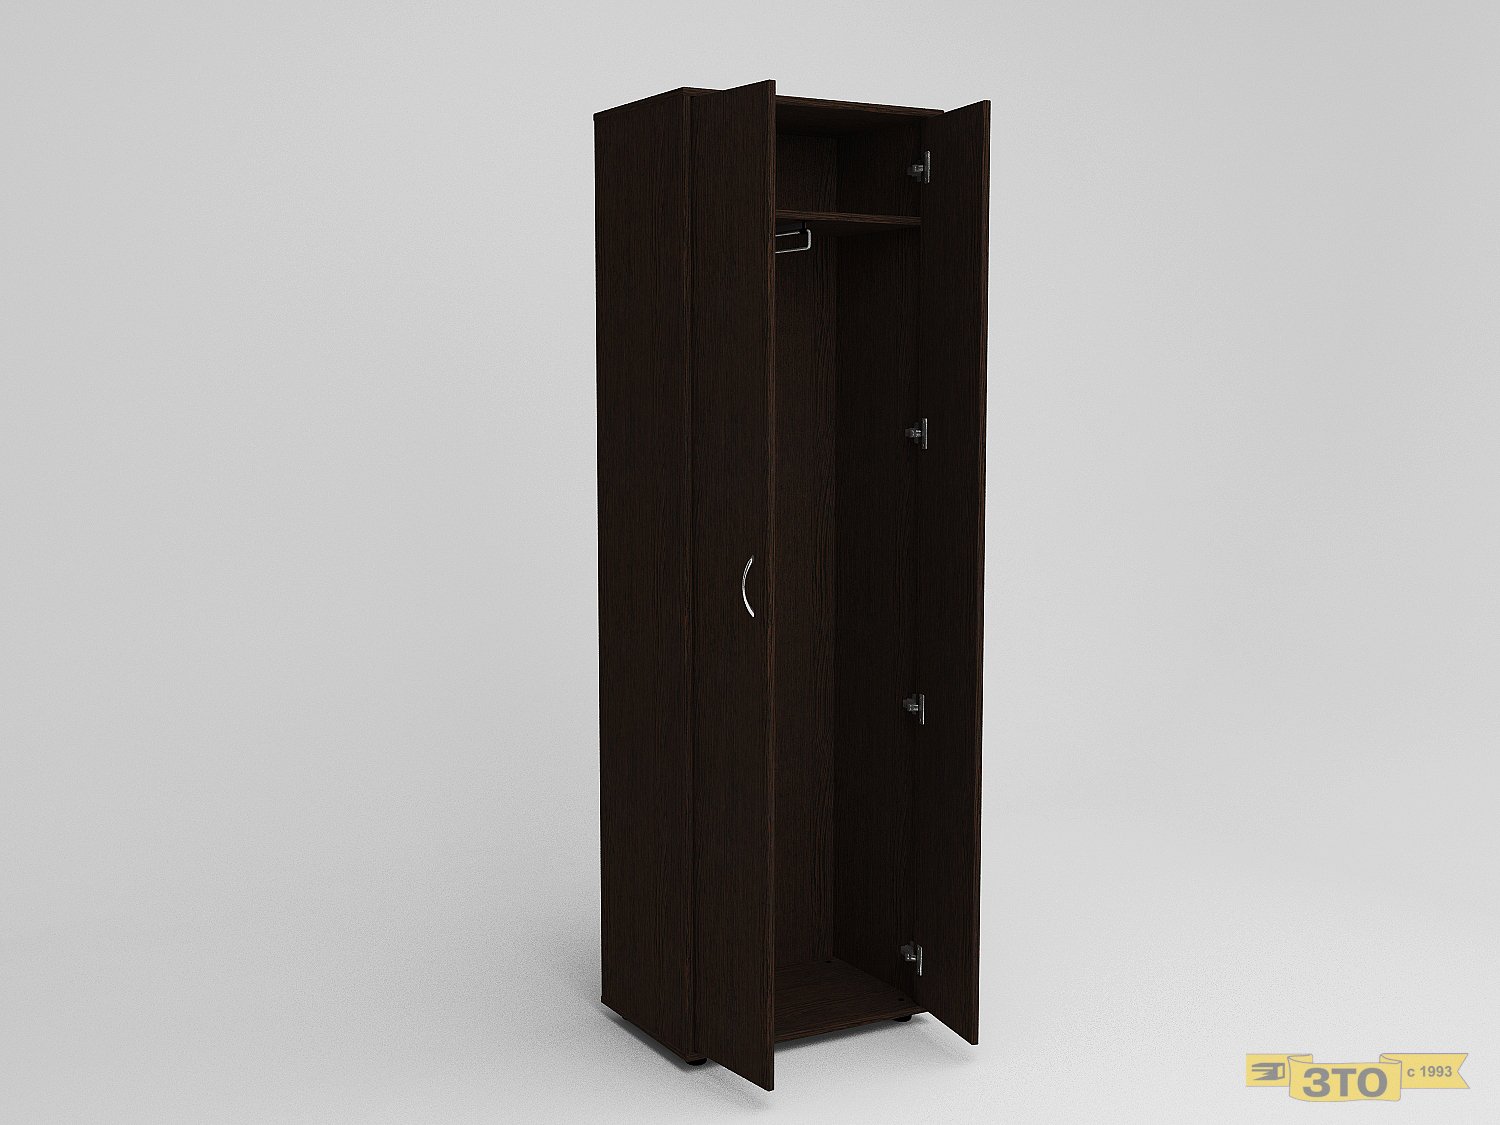 Шкаф гардероб 001 В-1950. Цена 2695 руб